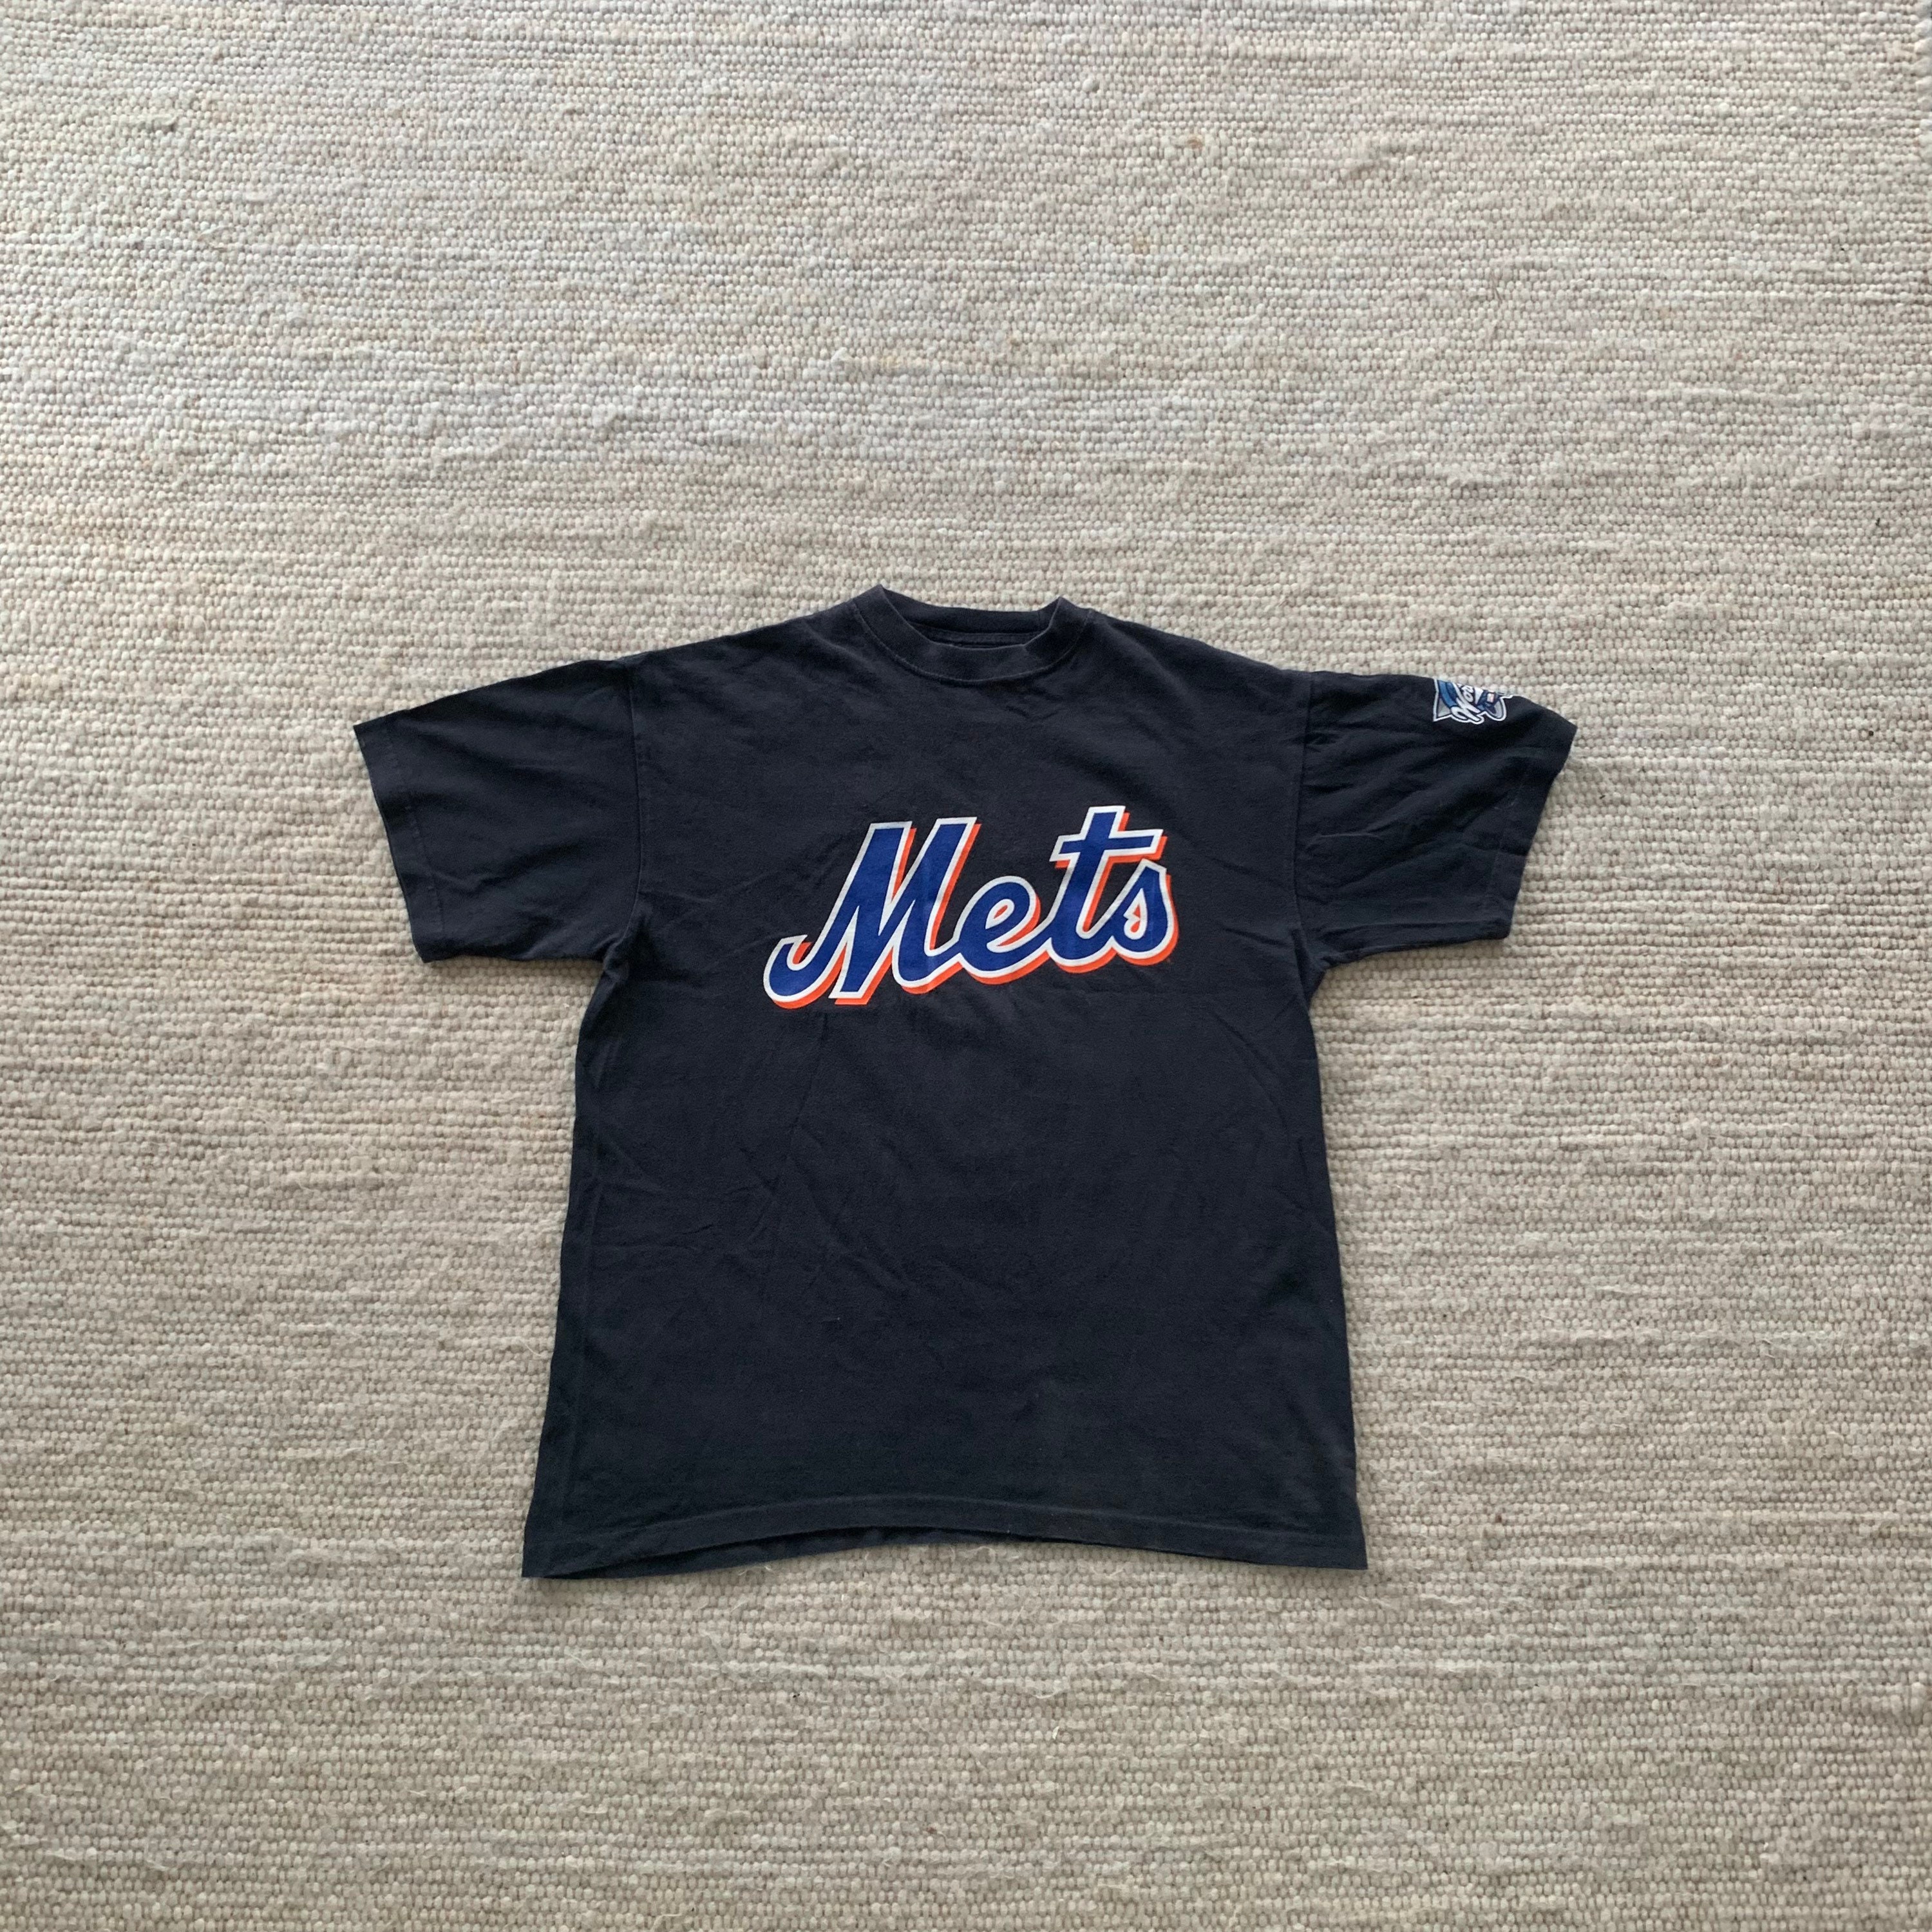 Majestic, Shirts, Mike Piazza Black Majestic Mets Jersey Size Xl